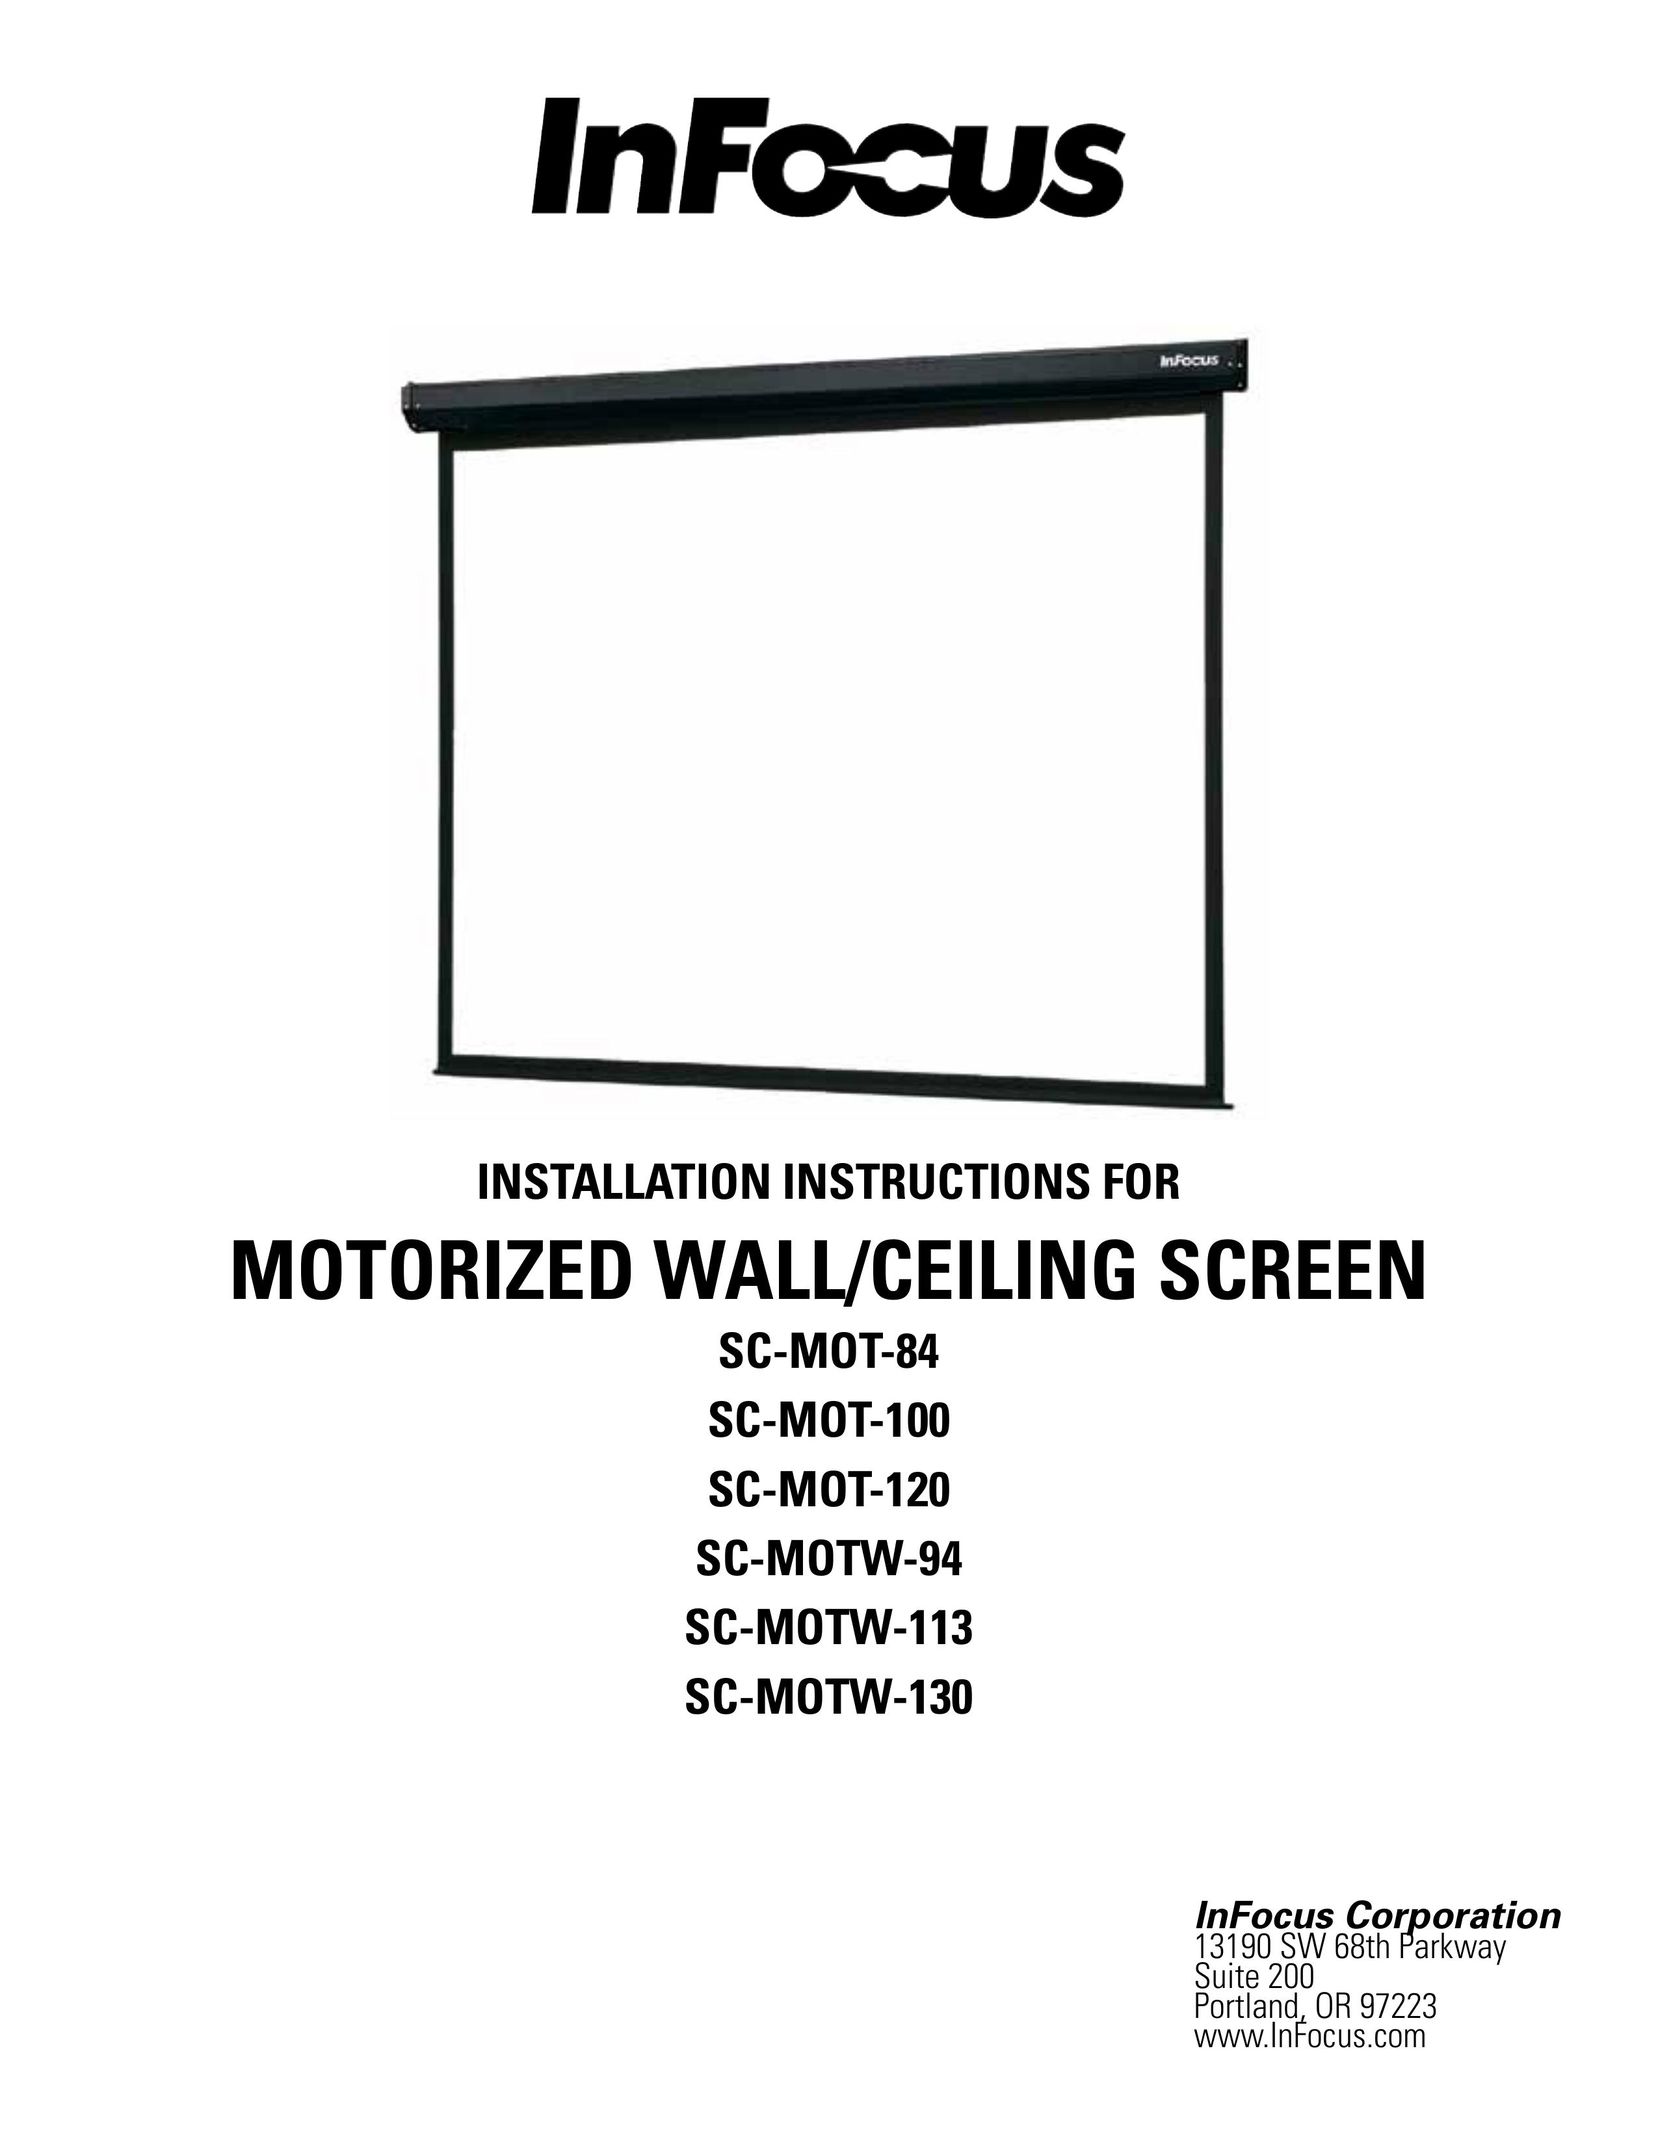 InFocus SC-MOT-120 Home Theater Screen User Manual